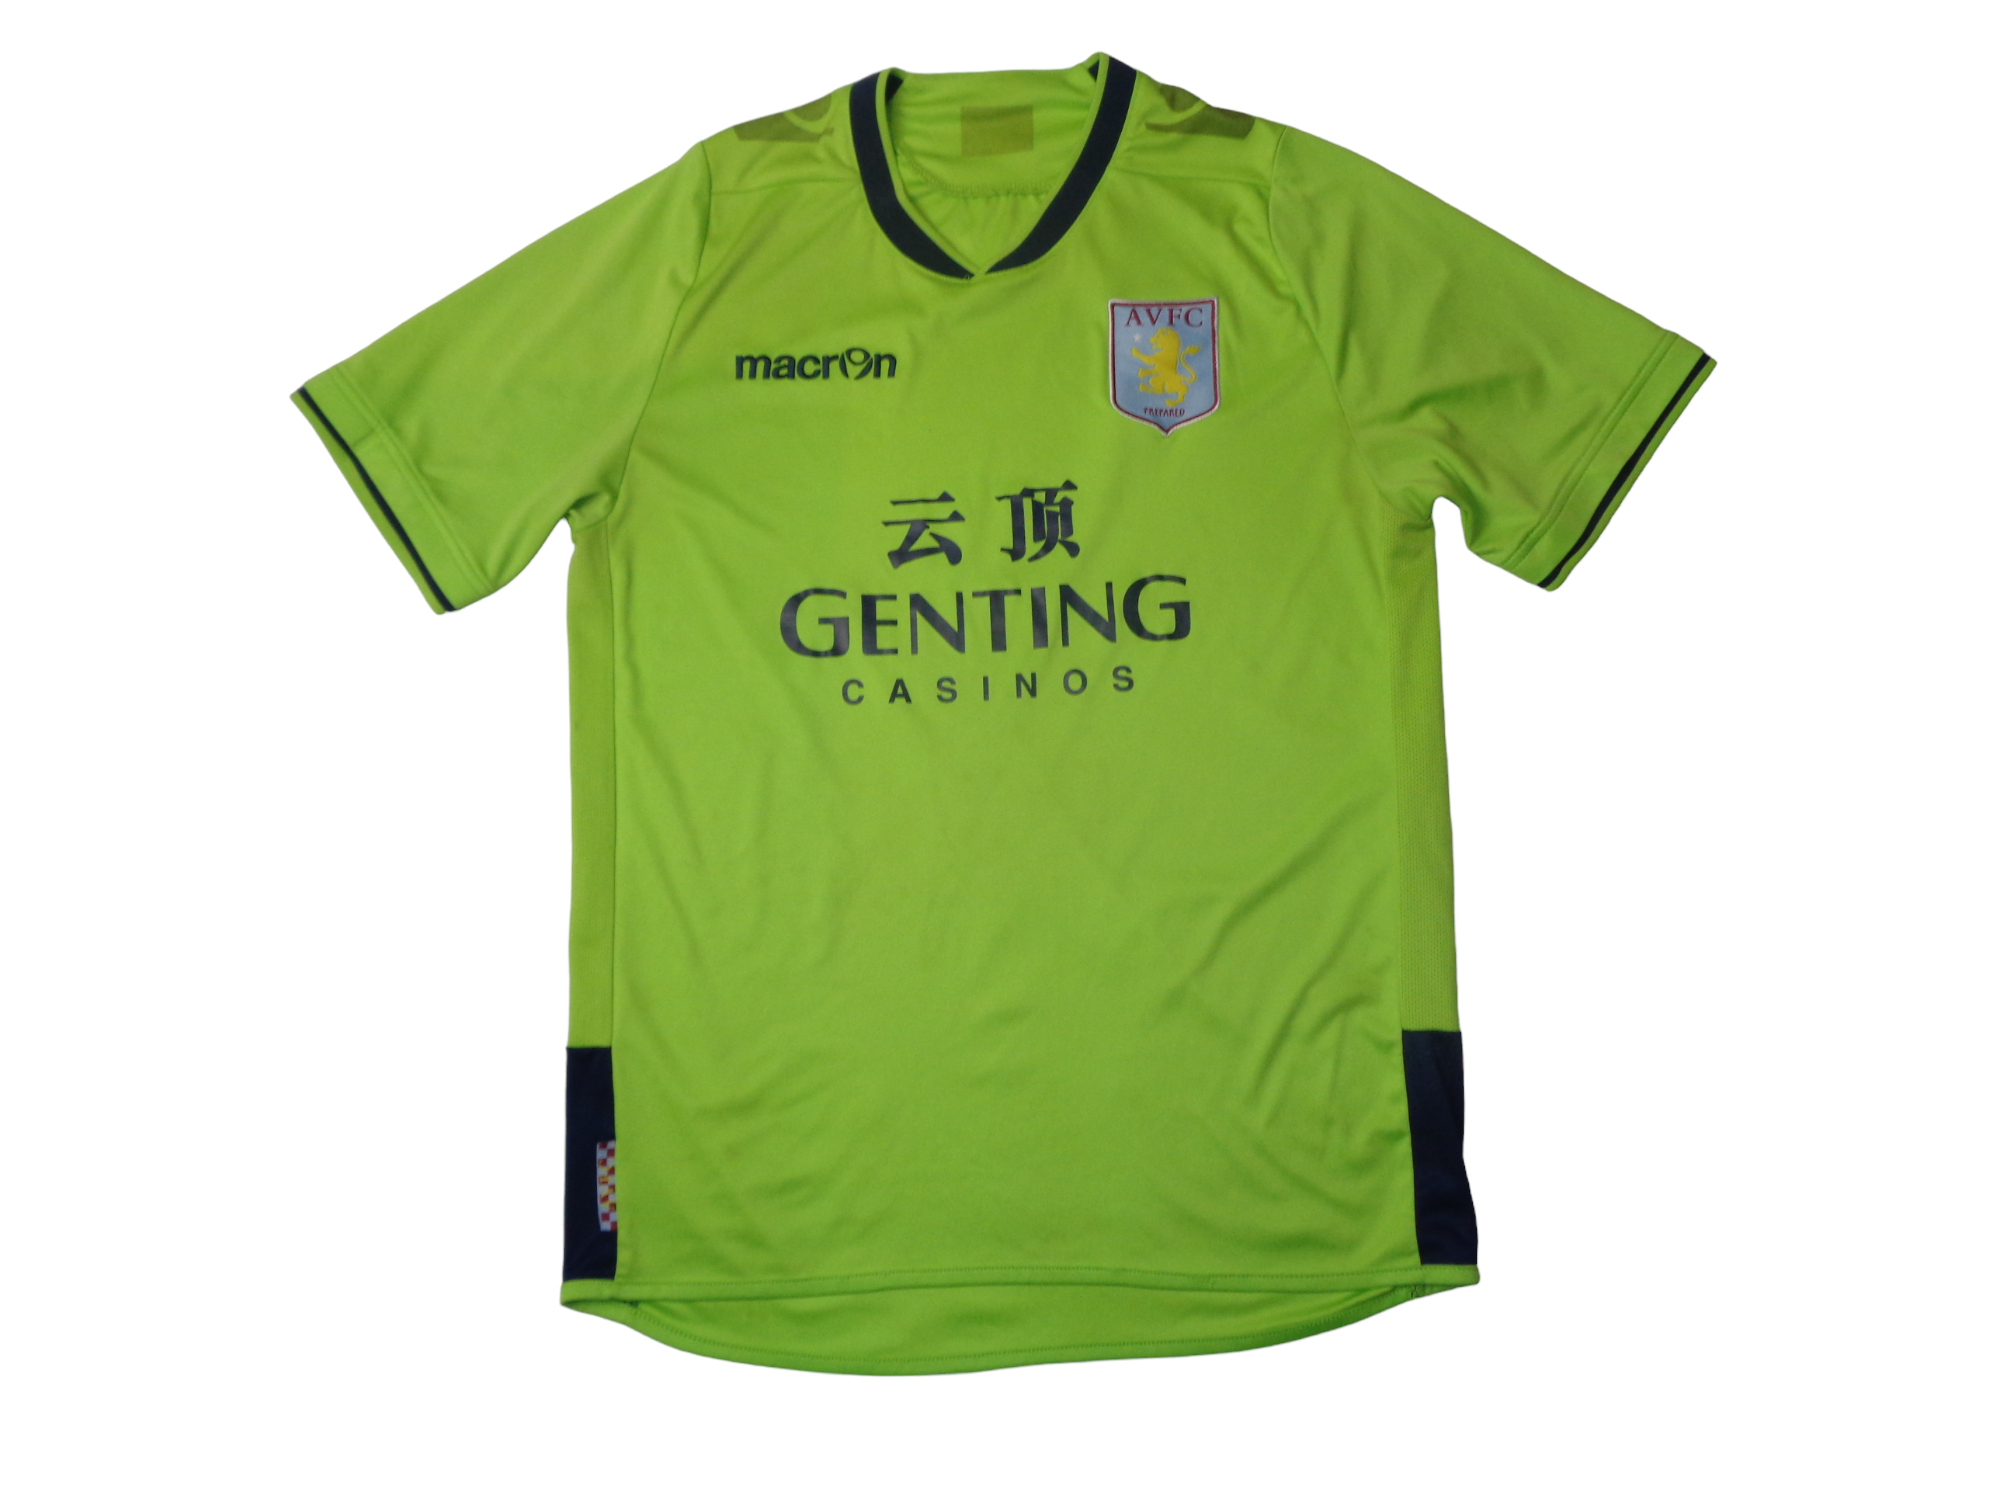 Genting is jersey sponsor for Aston Villa